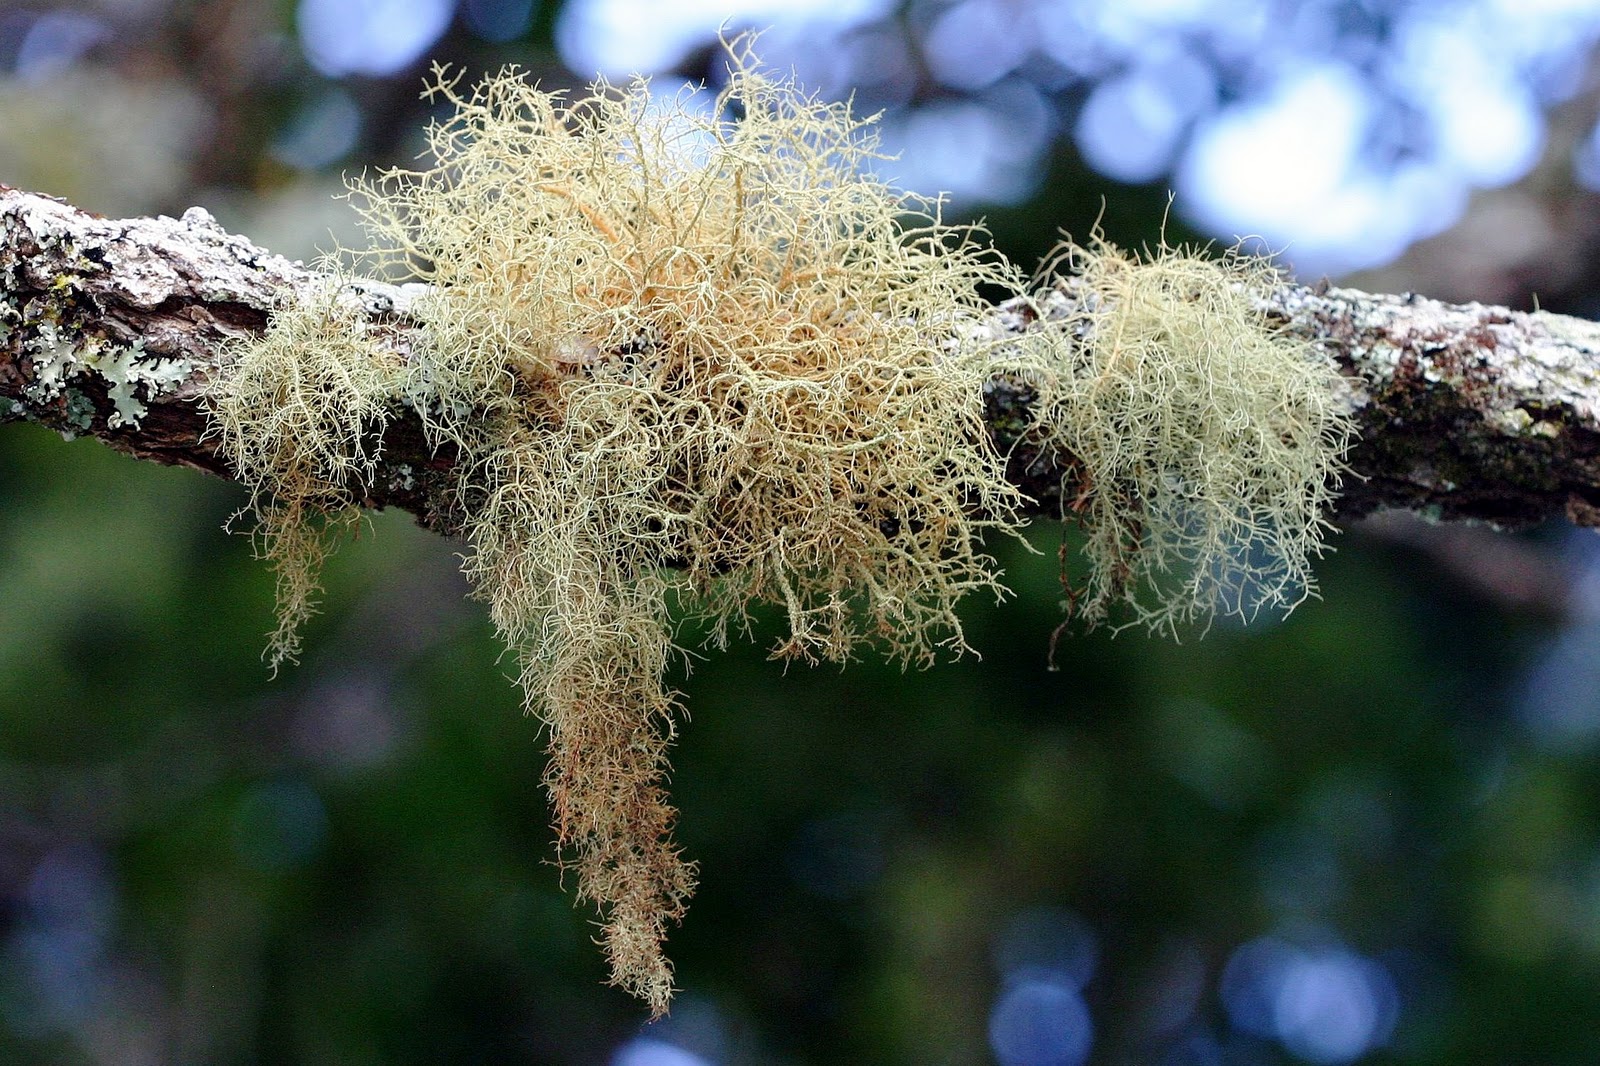 Botany word of the day : Fruticose: Shrubby. Describing lichens